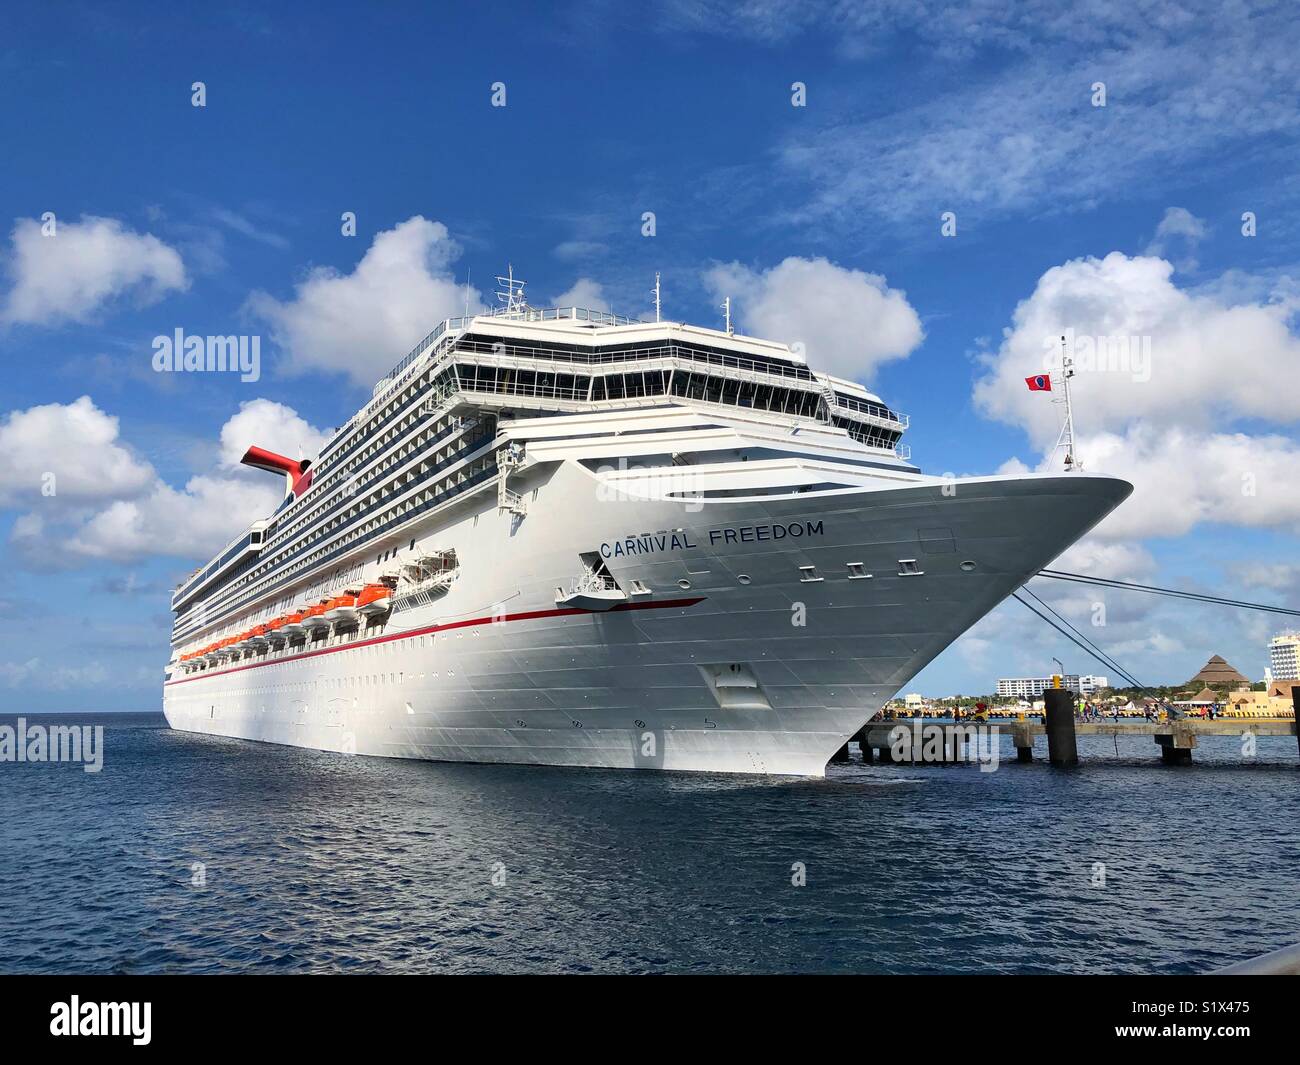 Carnival Freedom Cruise Ship Docked in Cozumel Mexico Cruise Port Stock Photo